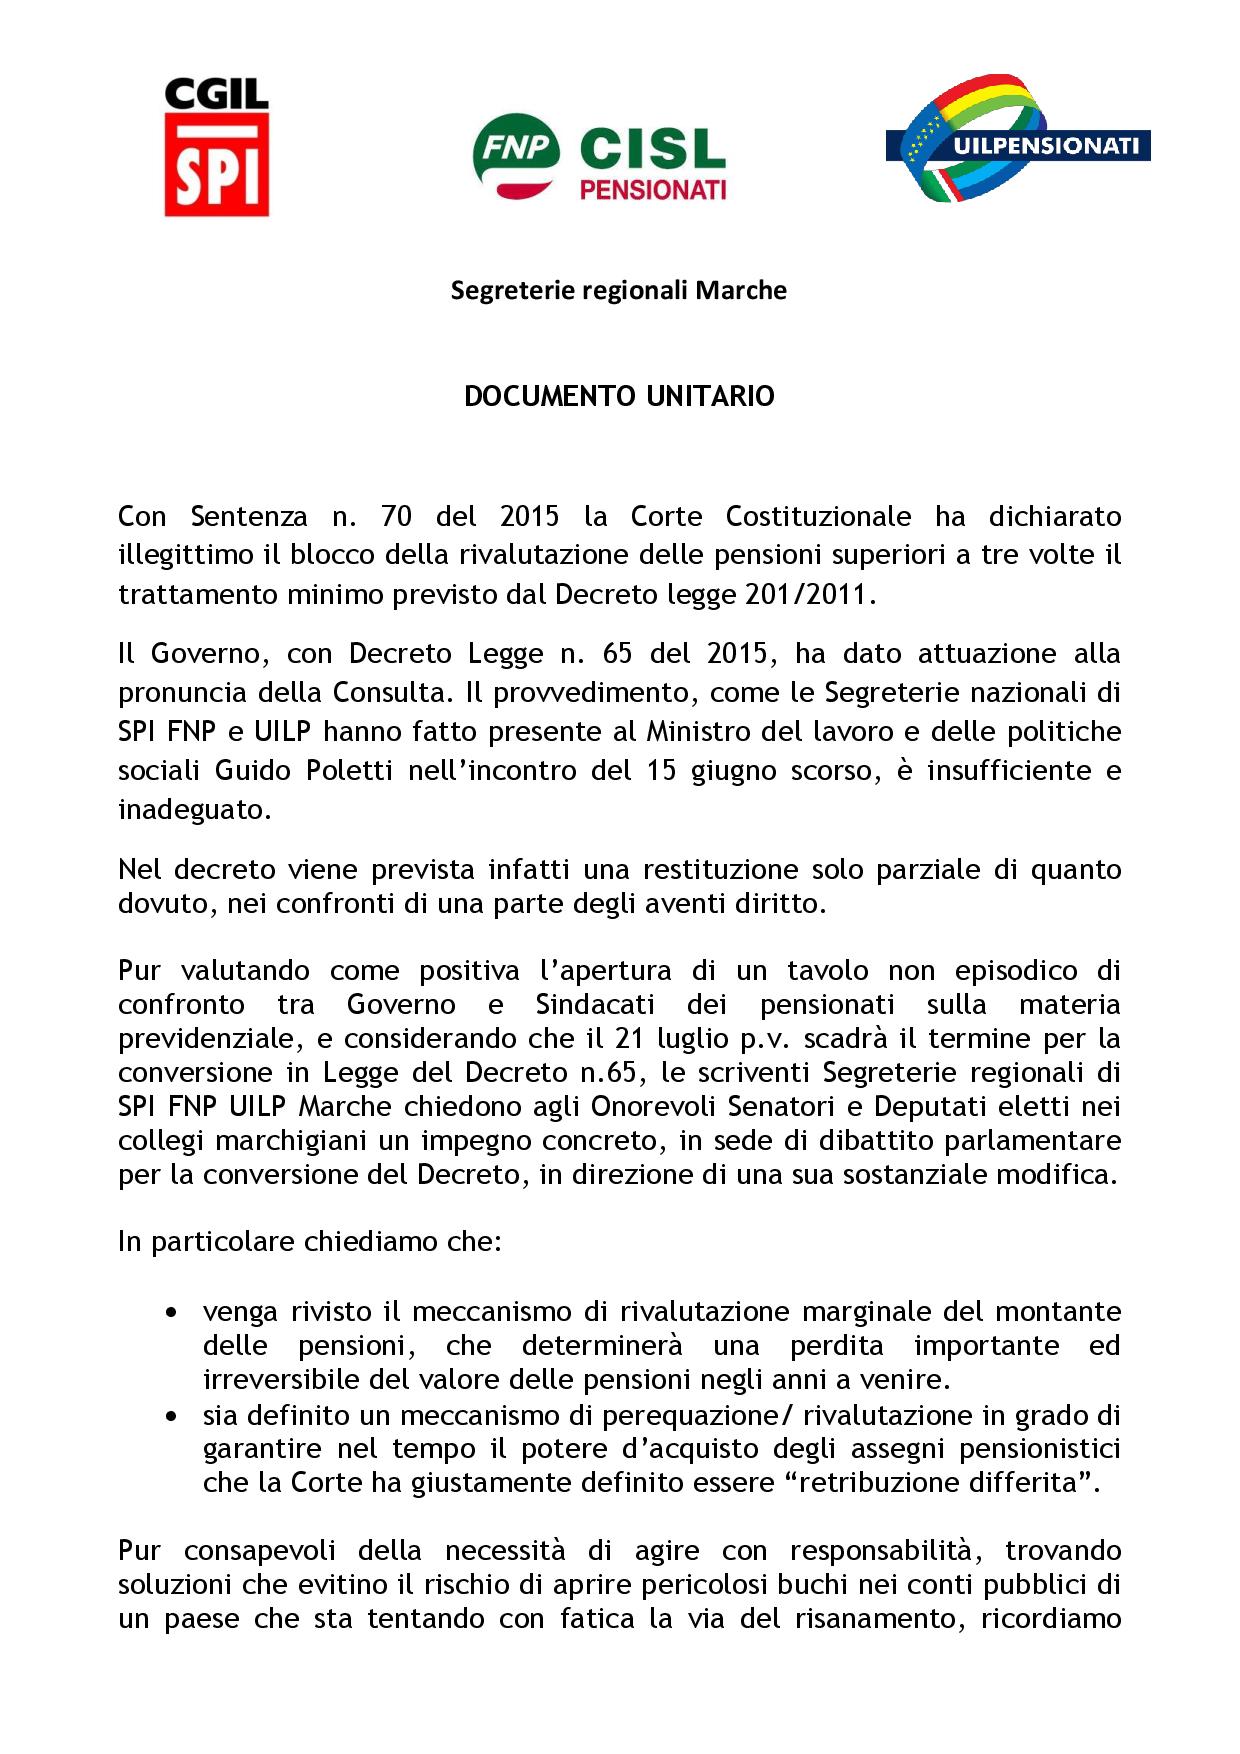 DOCUMENTO PENSIONI-page-001